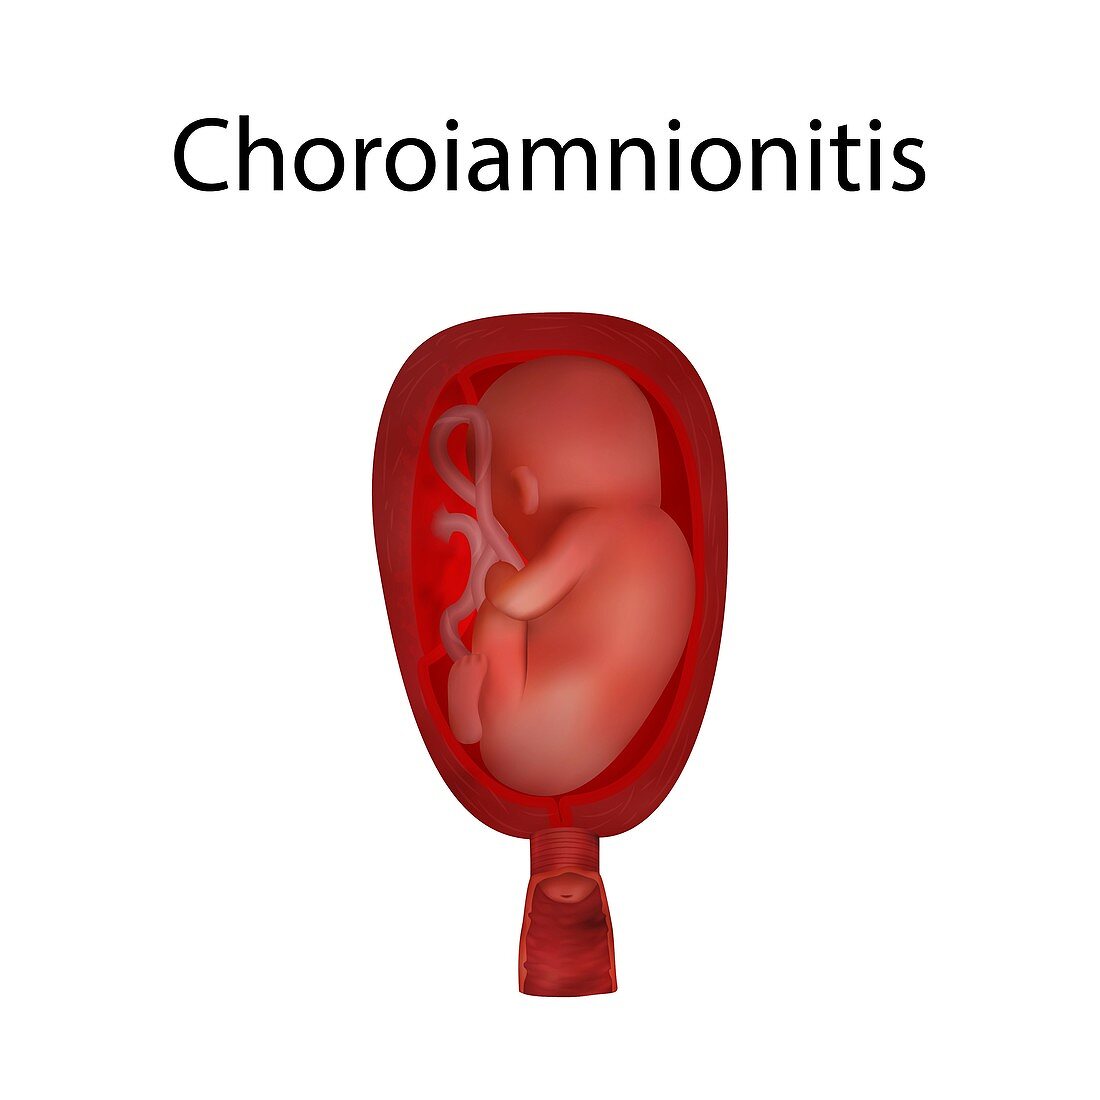 Choroiamnionitis, illustration